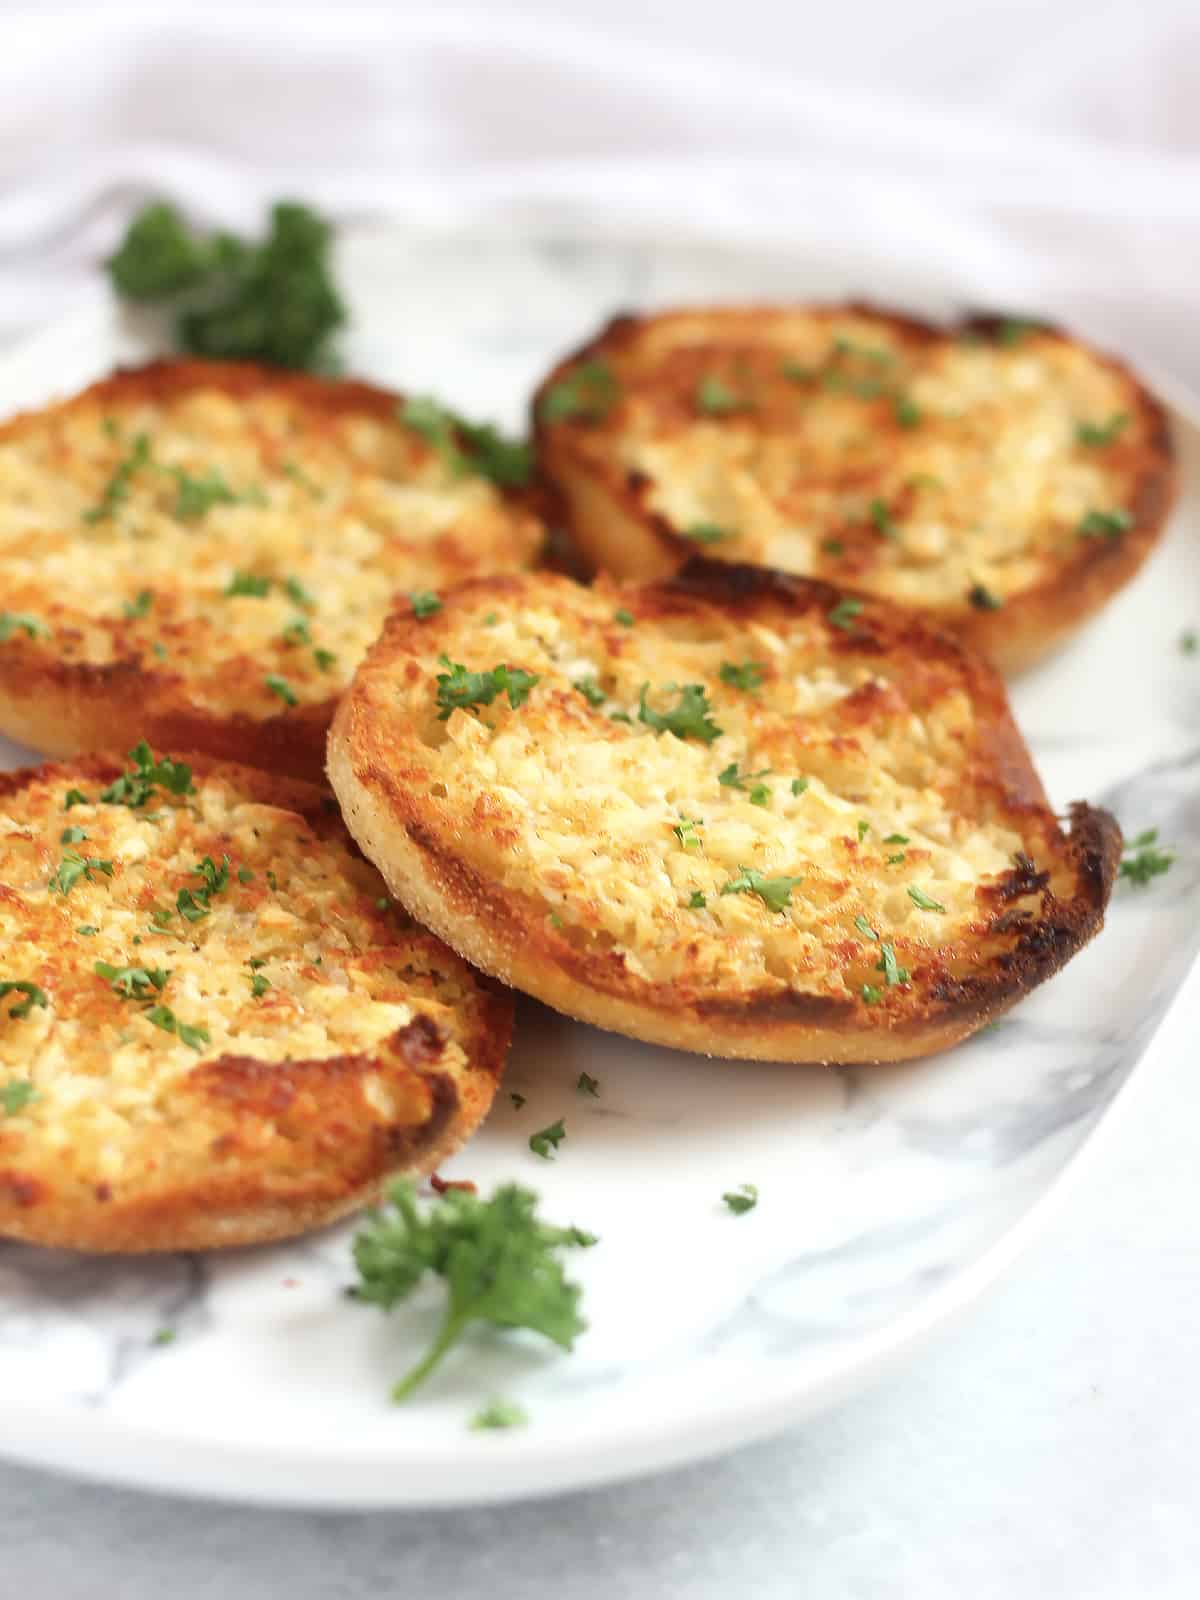 Golden brown garlic bread English muffins garnished with fresh parsley.